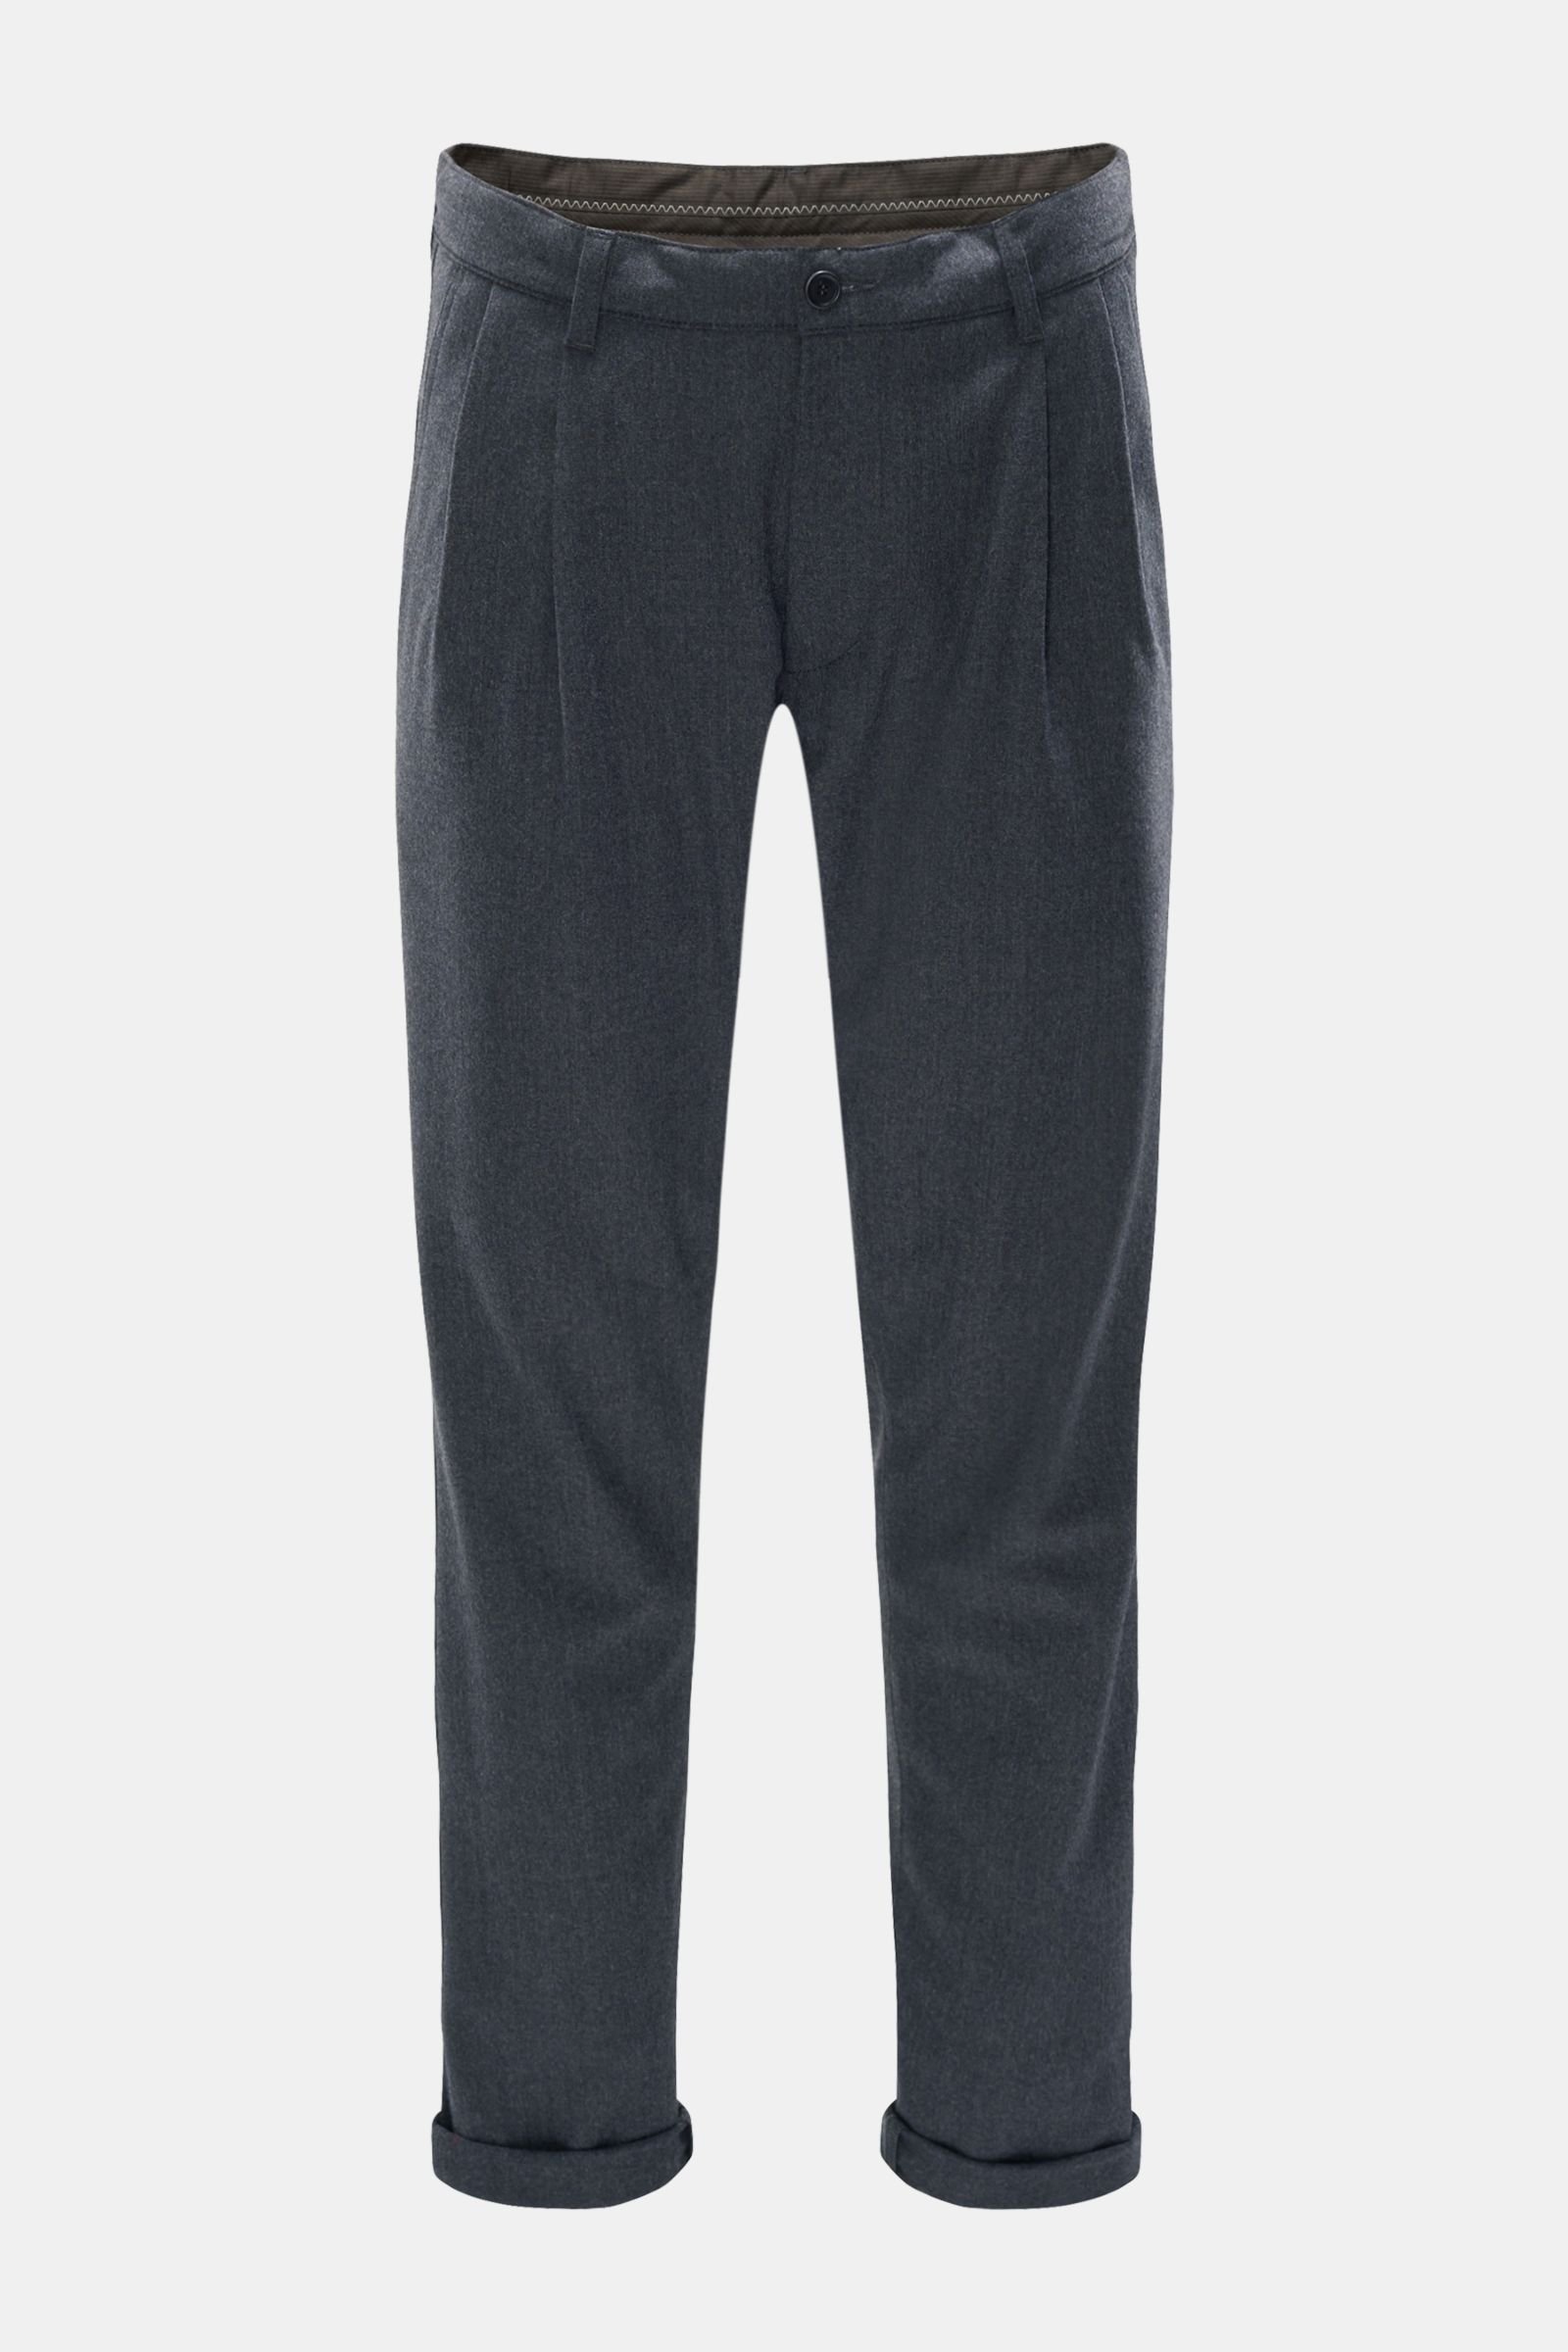 Wool jogger pants 'Funzionale Pinces' dark grey